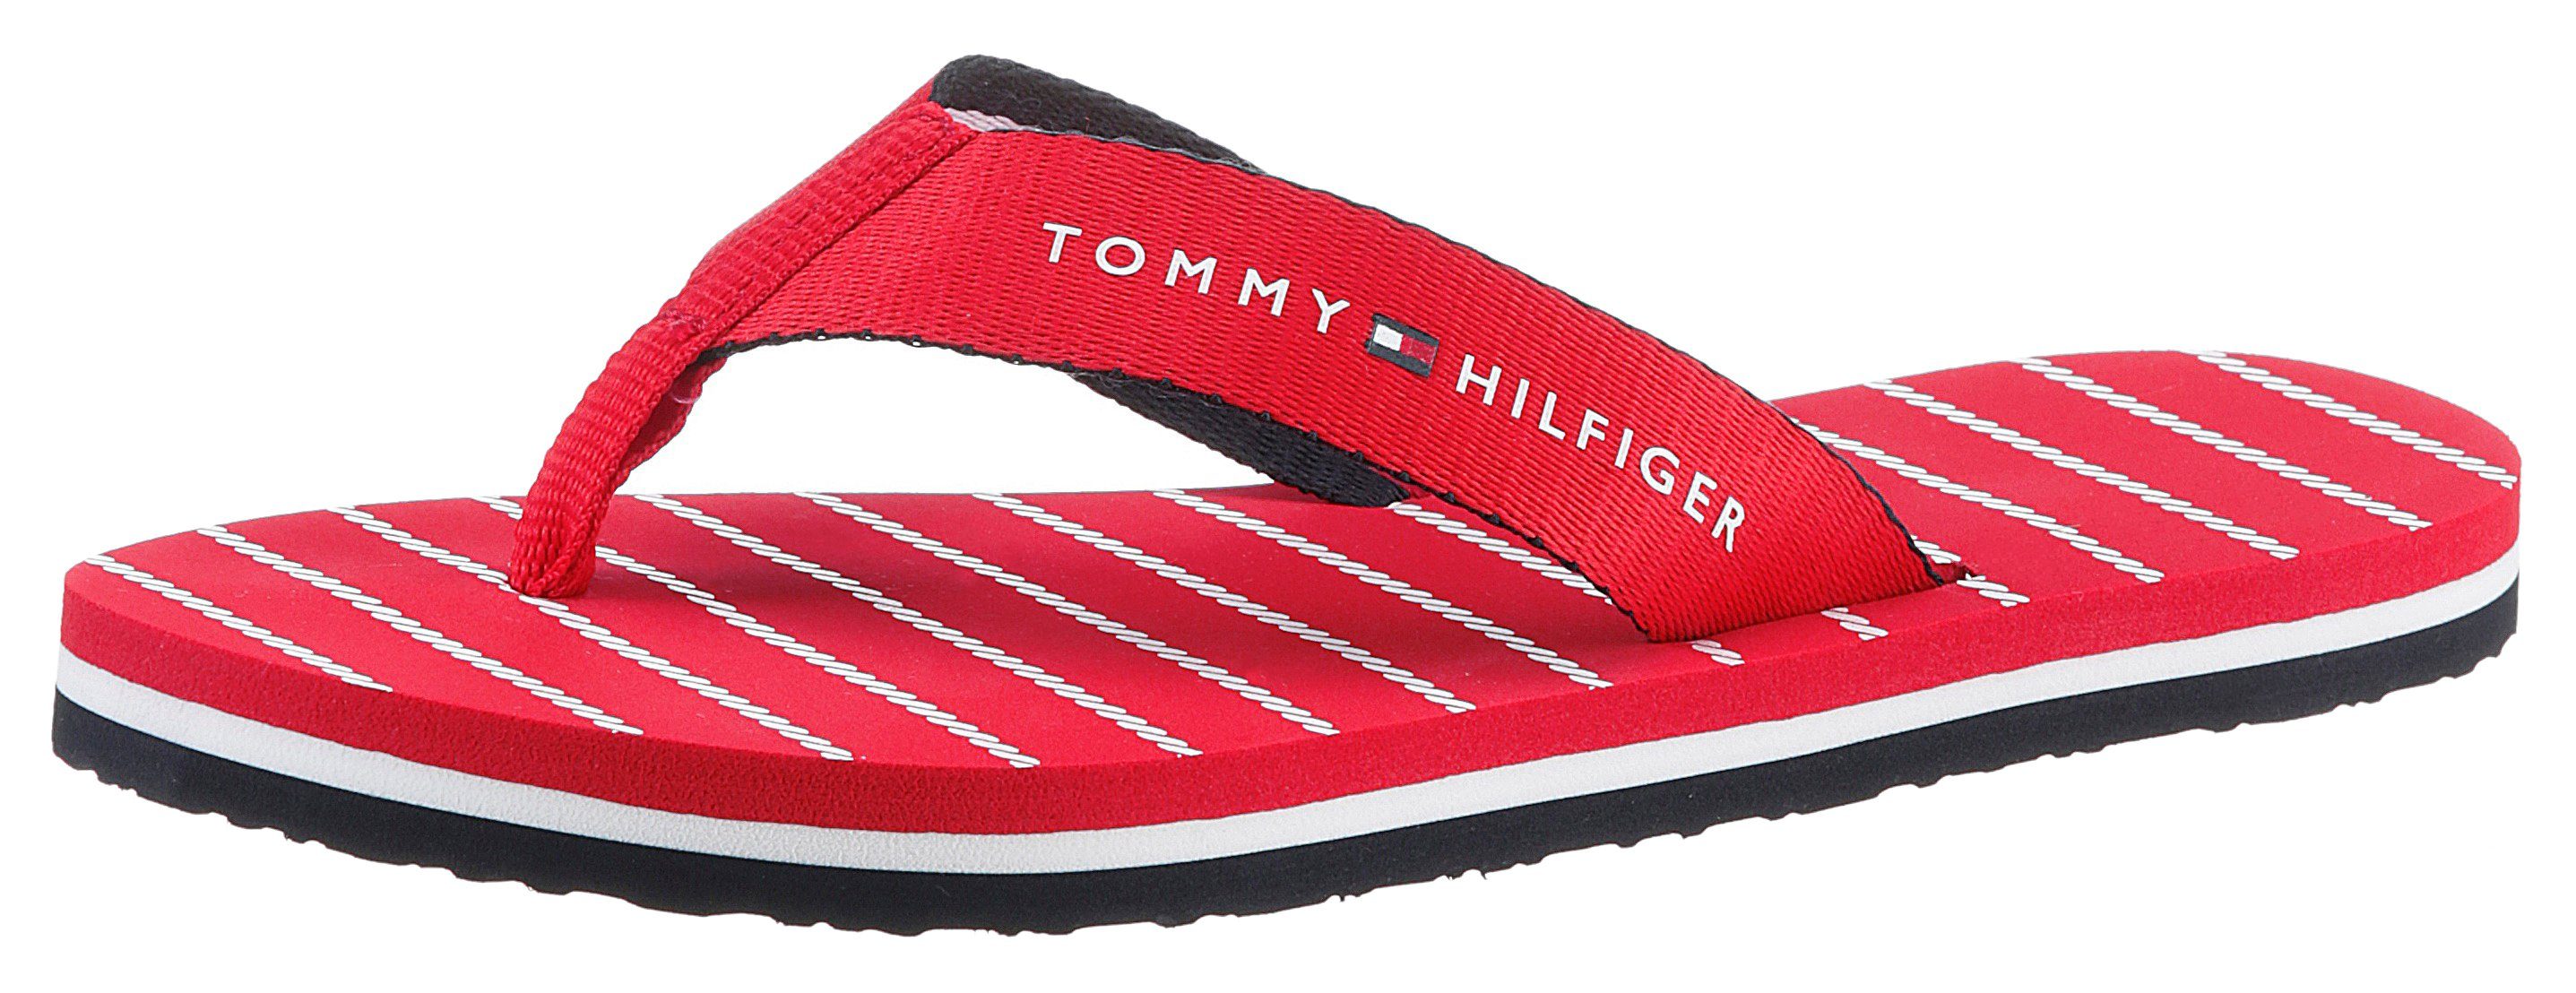 Tommy Hilfiger TOMMY ESSENTIAL ROPE SANDAL Zehentrenner mit gestreifter Decksohle rot